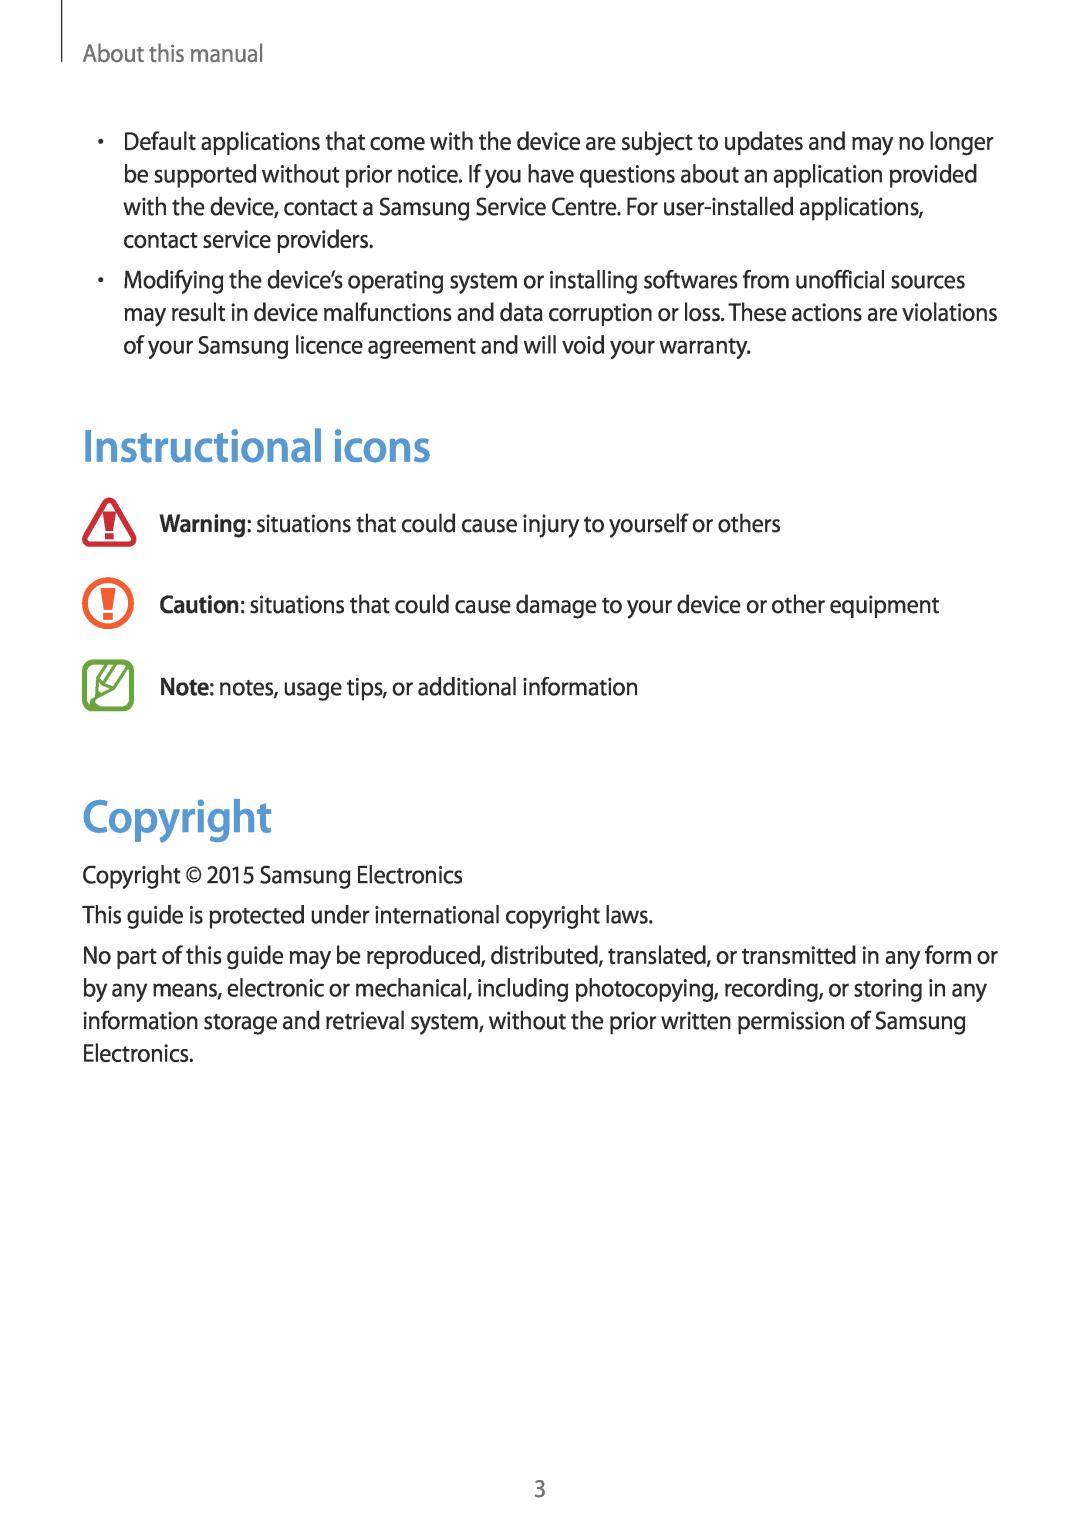 Samsung GT-I9195ZWIVGR, GT-I9195ZKIATO, GT-I9195DKIDBT, GT-I9195ZWIDBT Instructional icons, Copyright, About this manual 